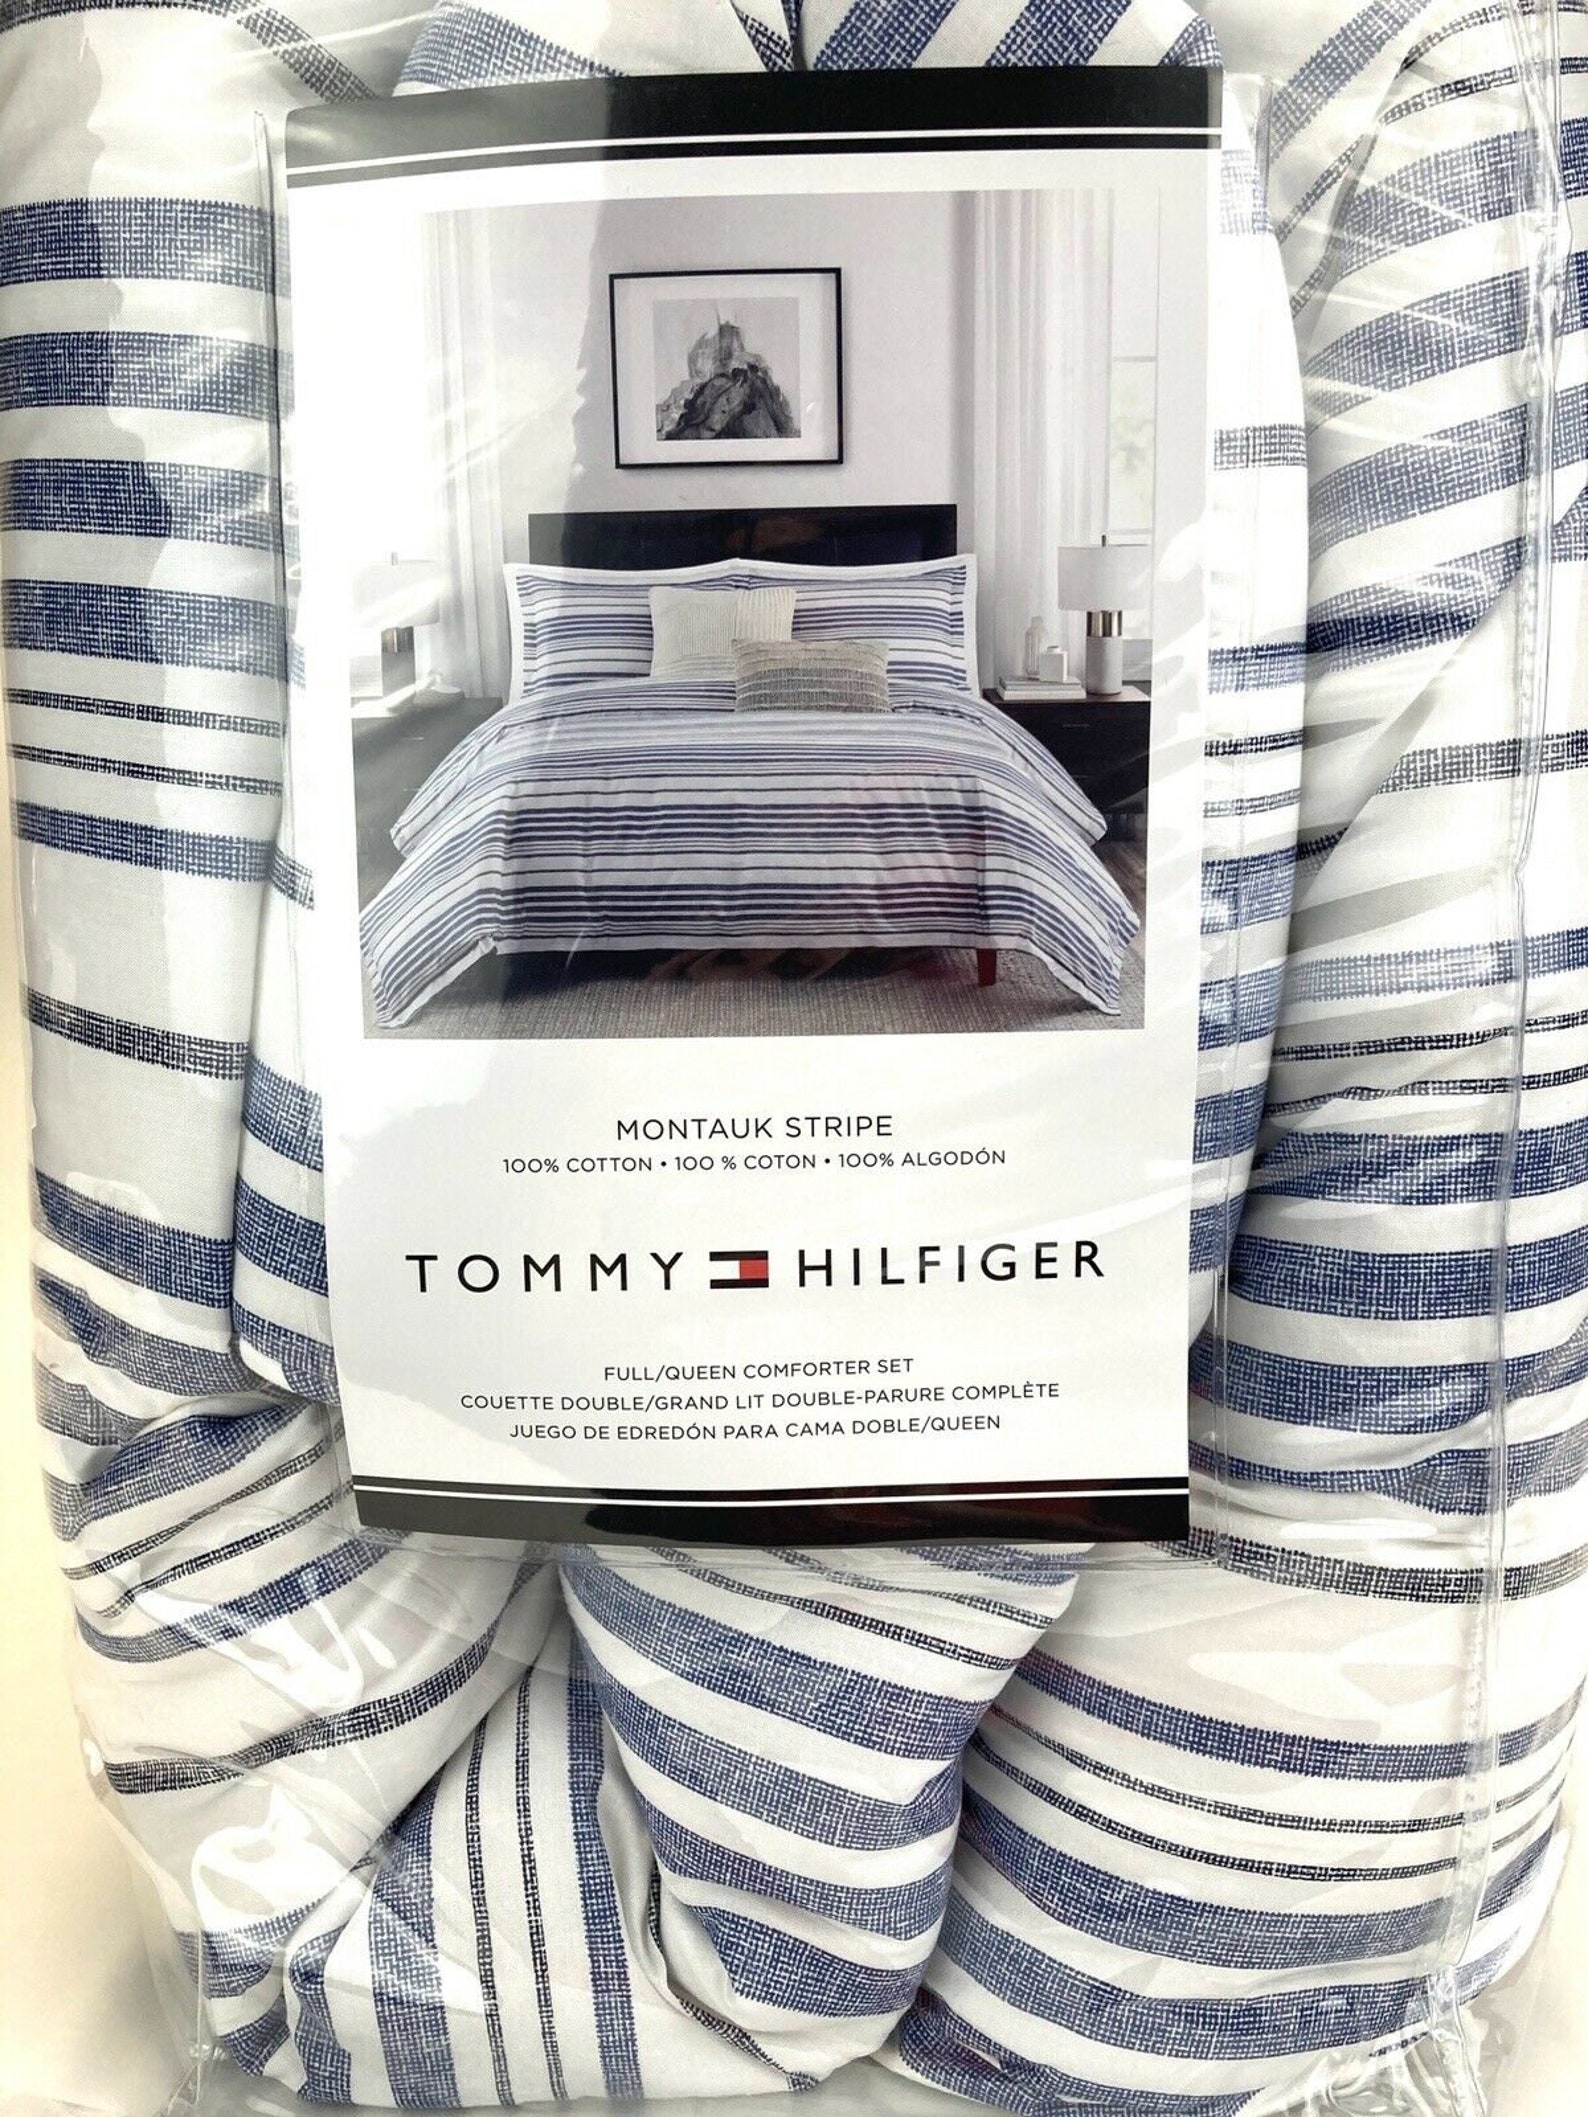 TOMMY HILFIGER Montauk Stripe Blue White 3 Piece Comforter Set | Etsy